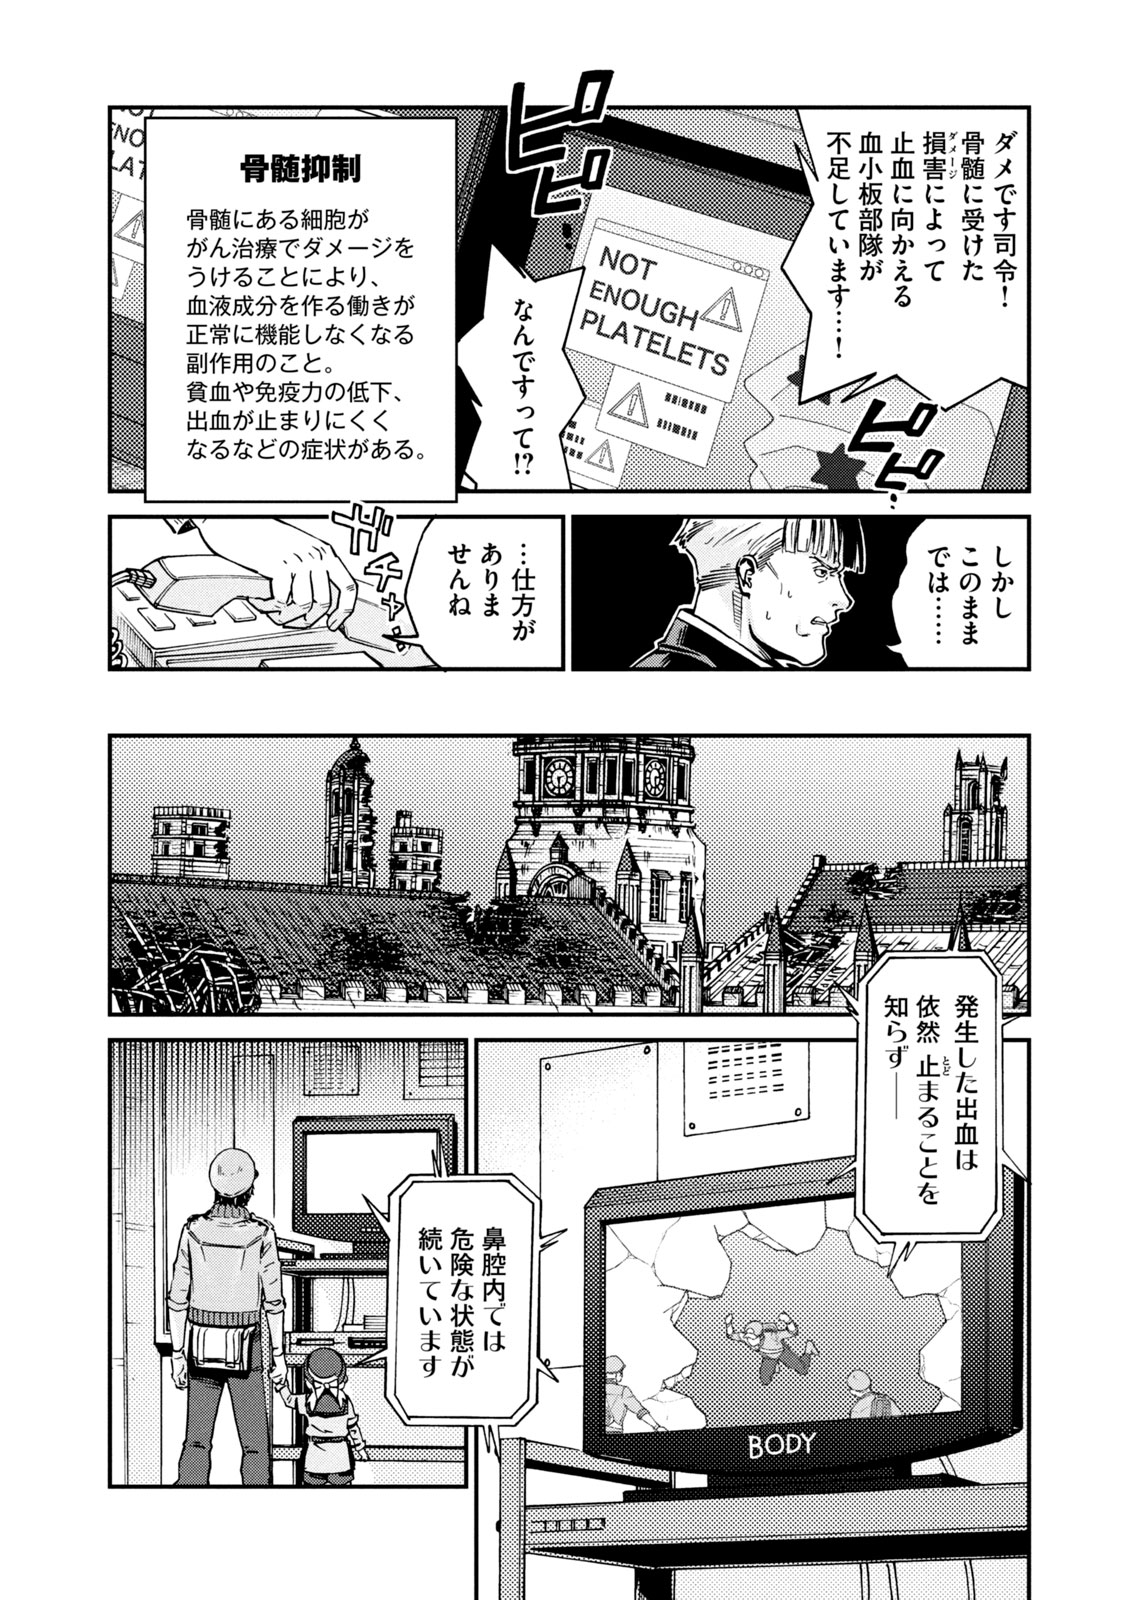 Hataraku Saibou BLACK - Chapter 42 - Page 22